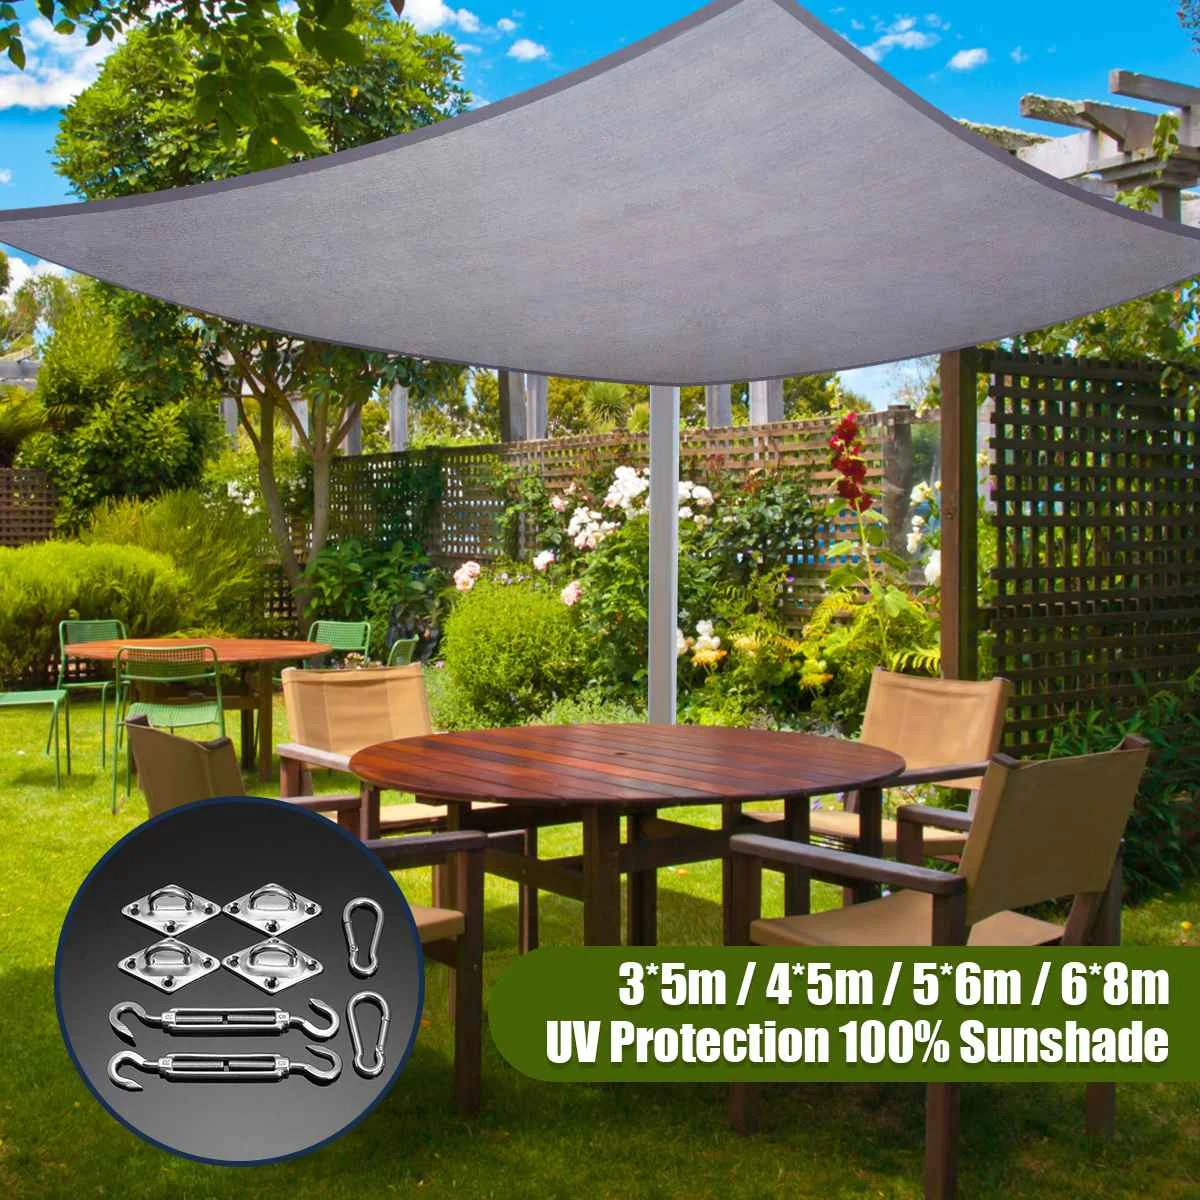 

300D AwningSummer Outdoor Waterproof 70% Anti-UV Shade Canvas Oxford Cloth Sunscreen Rain Cover Garden Courtyard Awning